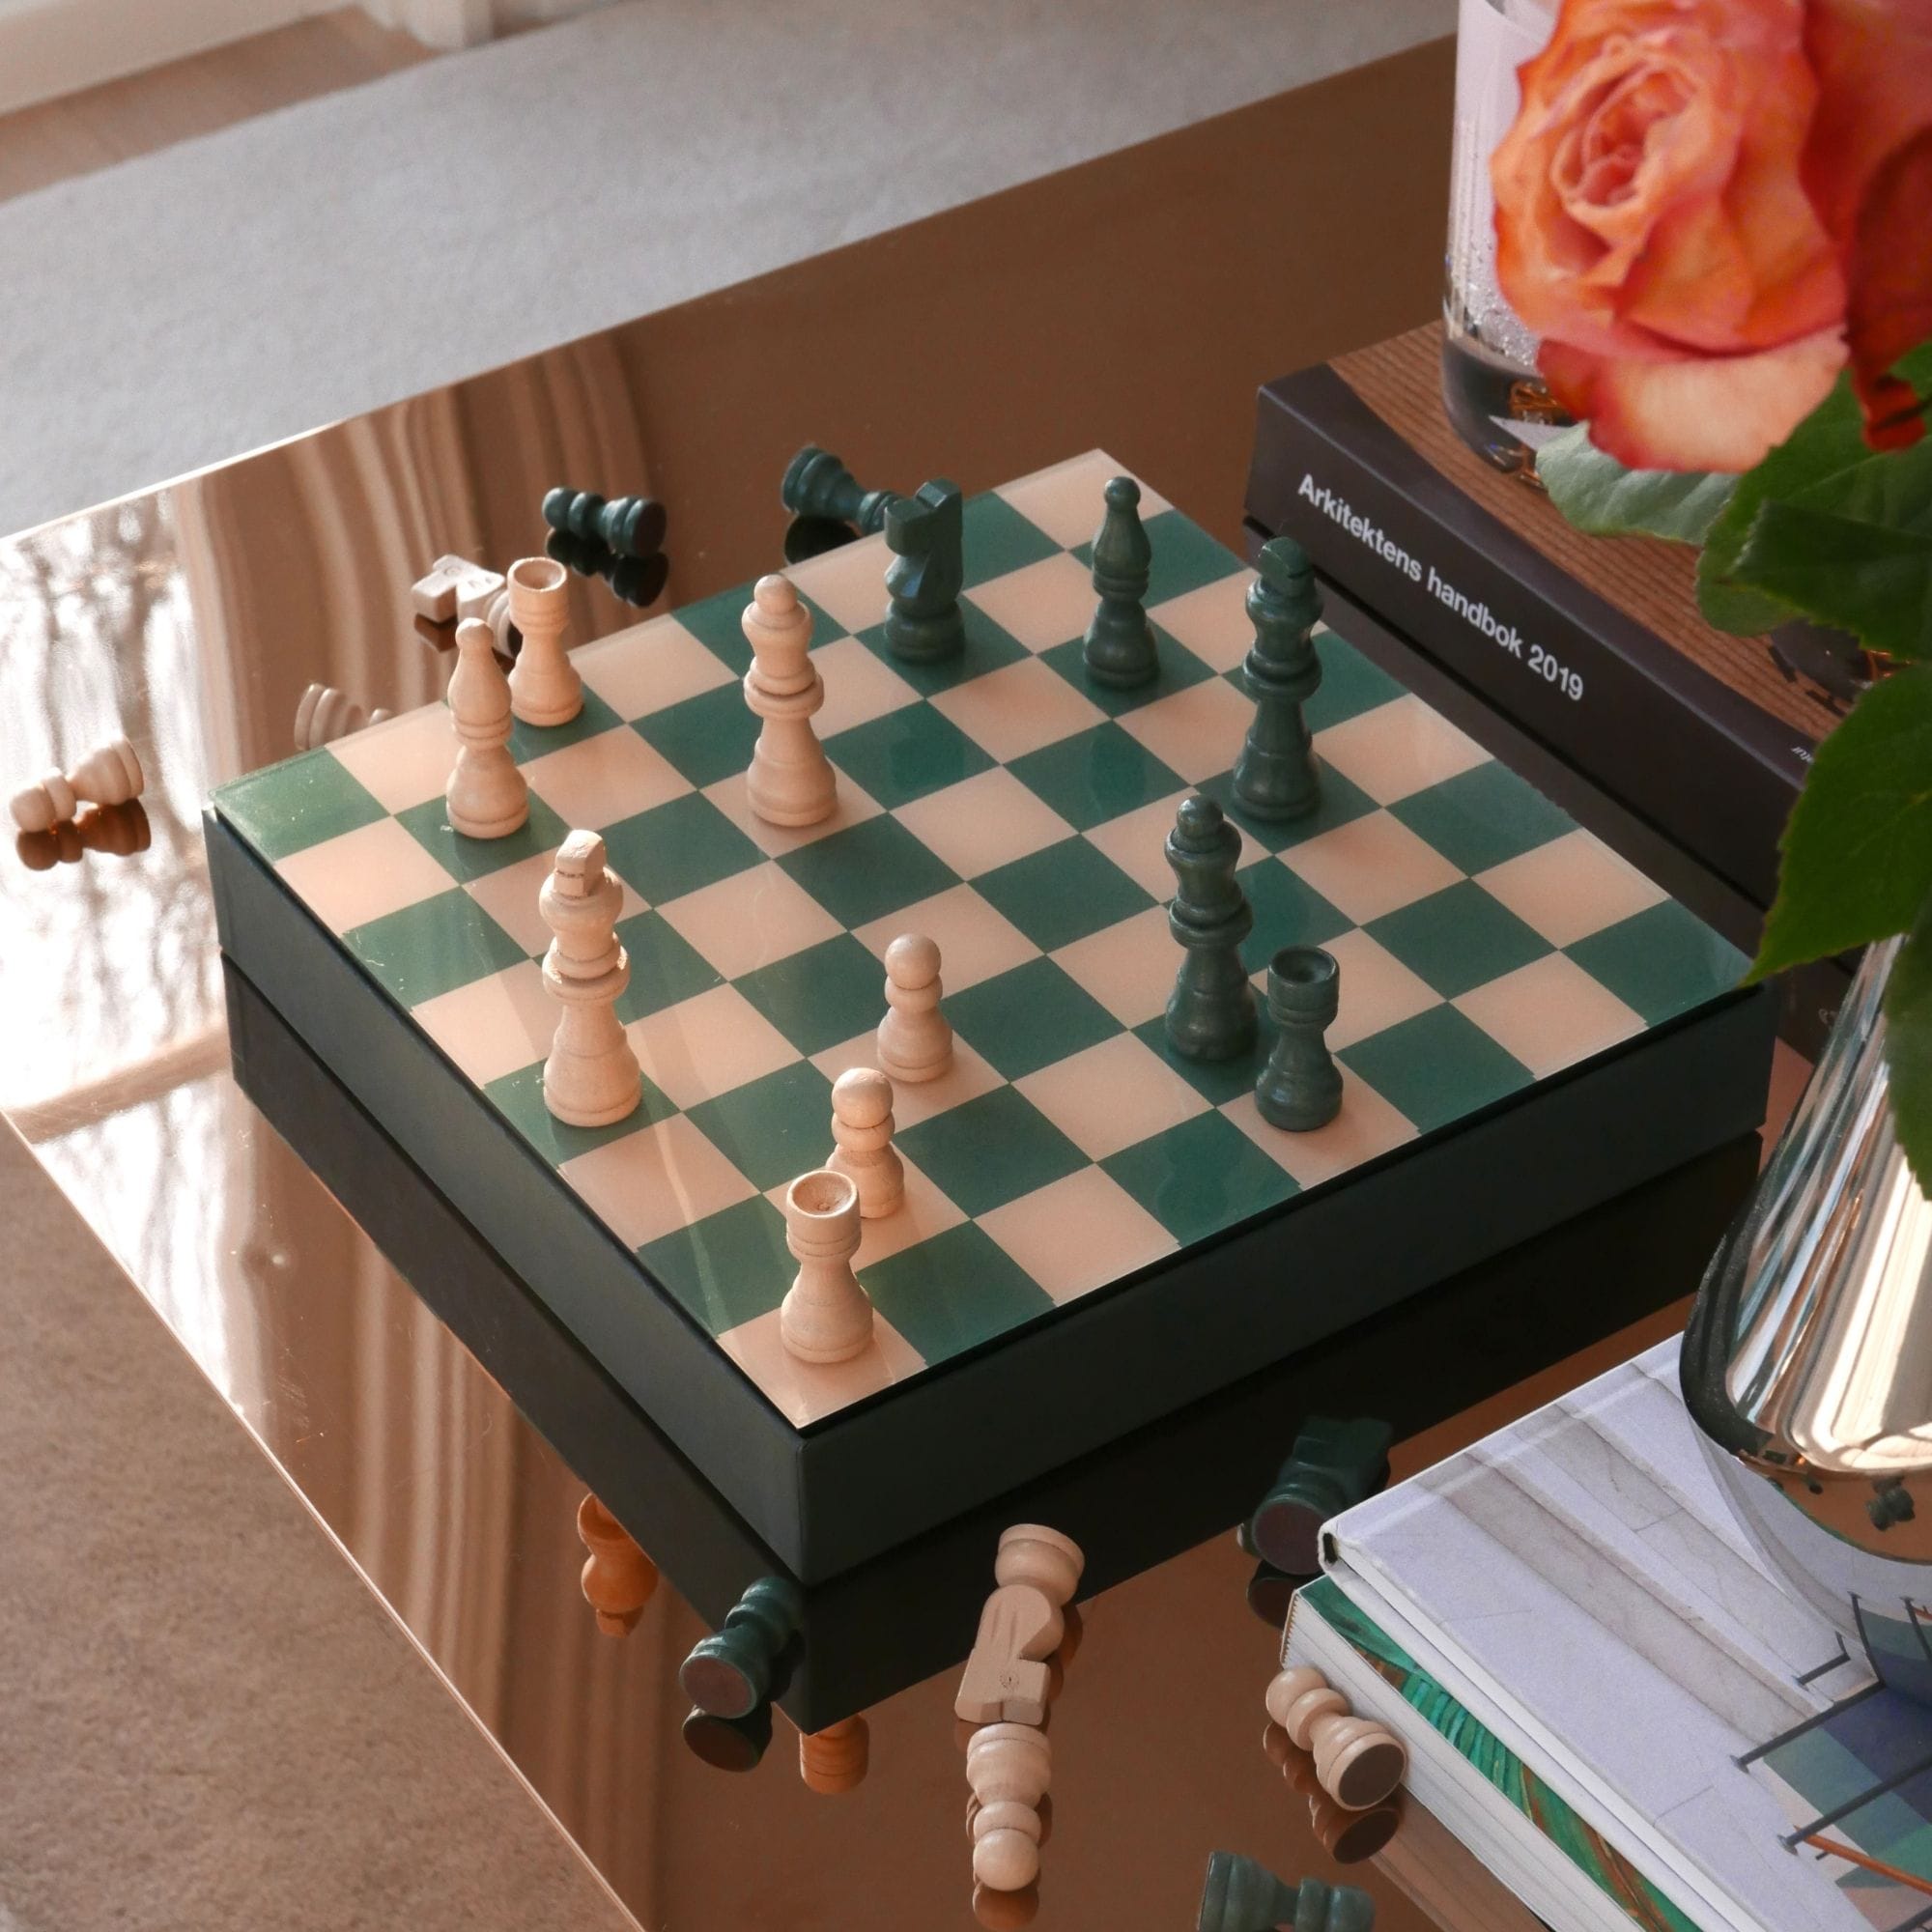 Chess - Shackspel Classic